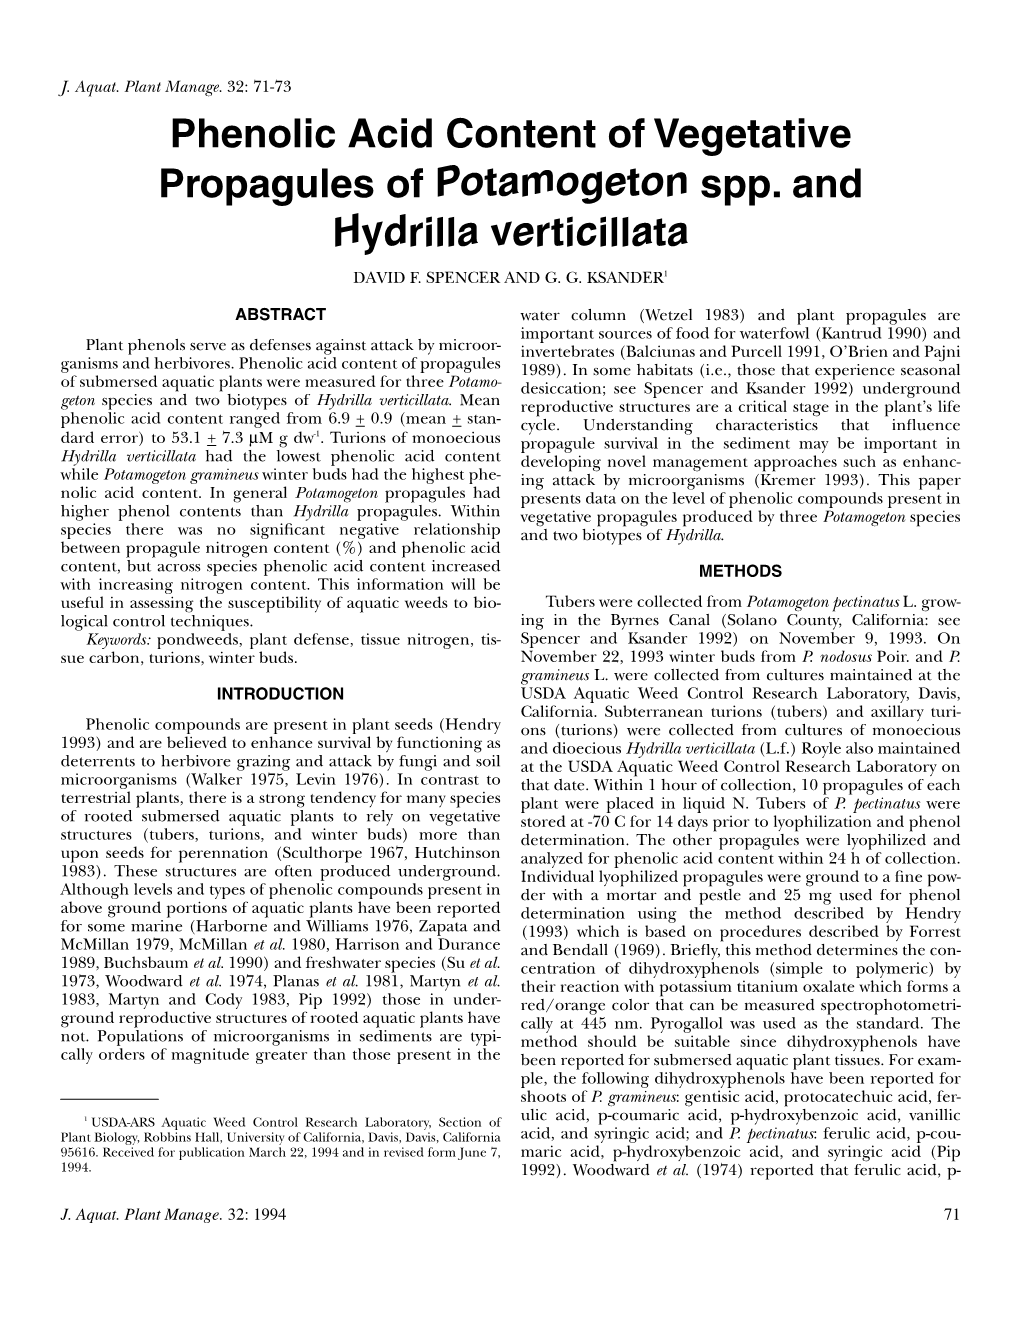 Phenolic Acid Content of Vegetative Propagules of Potamogeton Spp